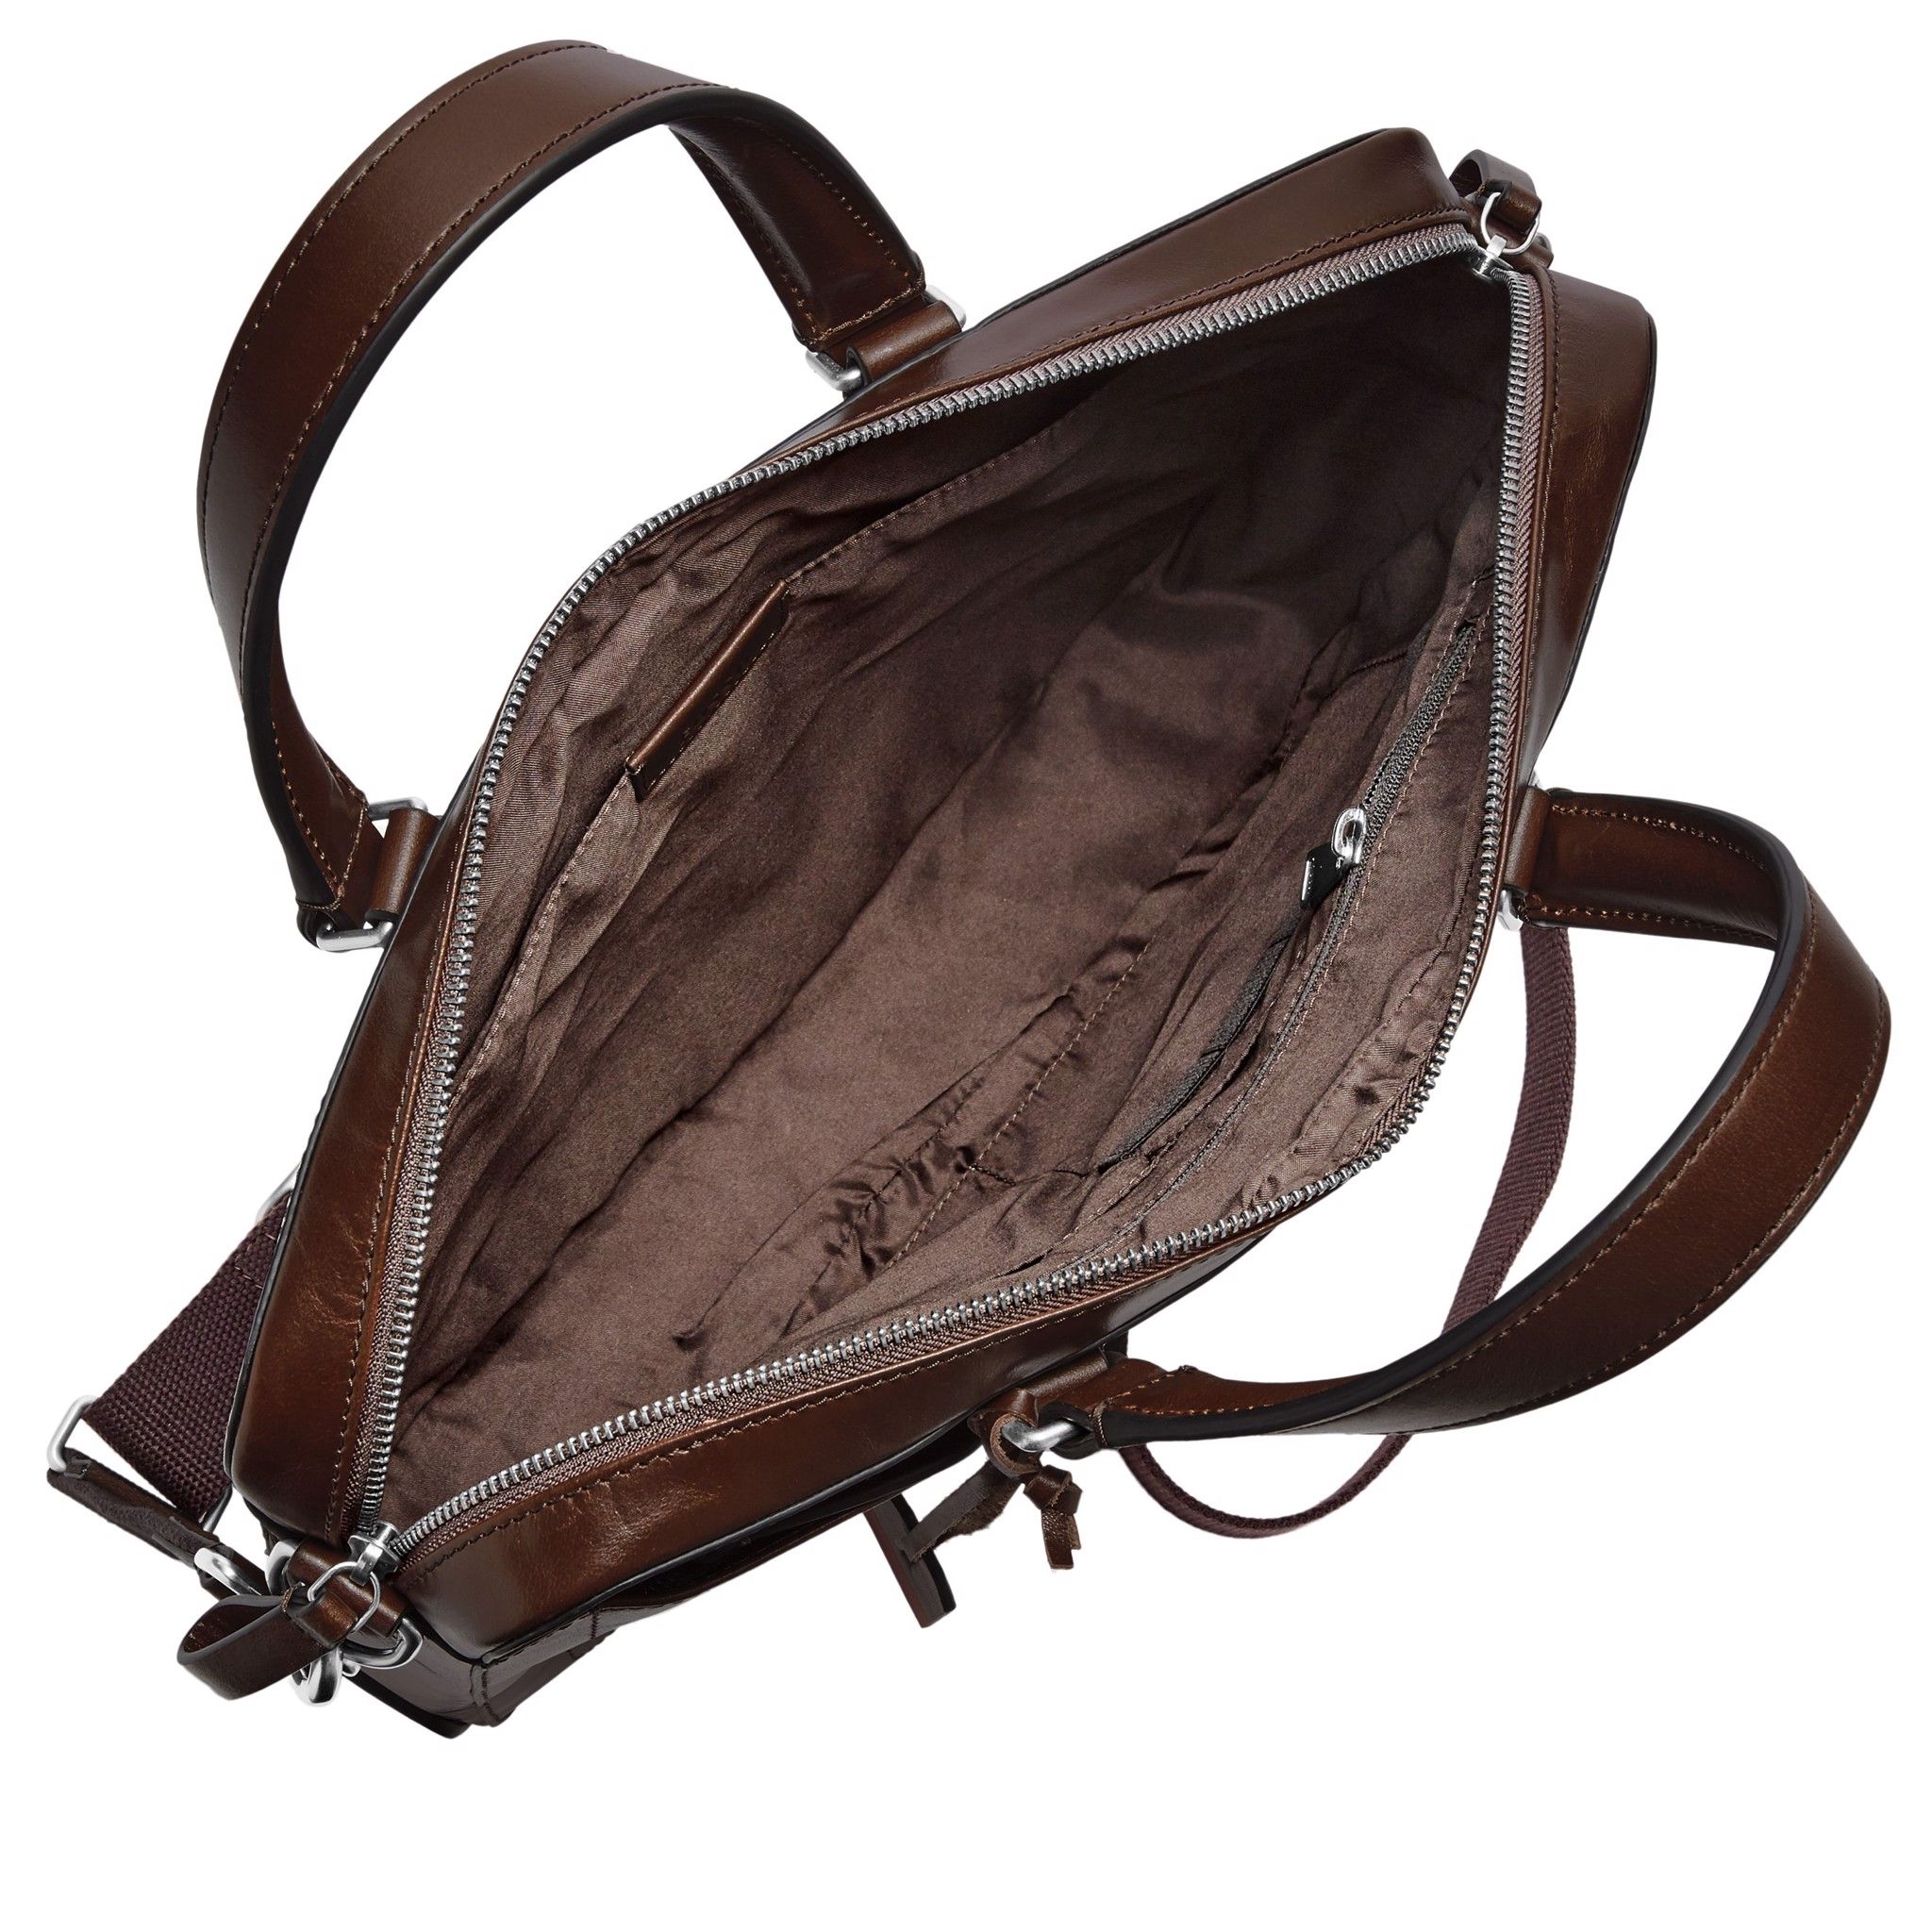  Túi đeo chéo nam Fossil Defender Shoulder Bag MBG9463201 - màu nâu 